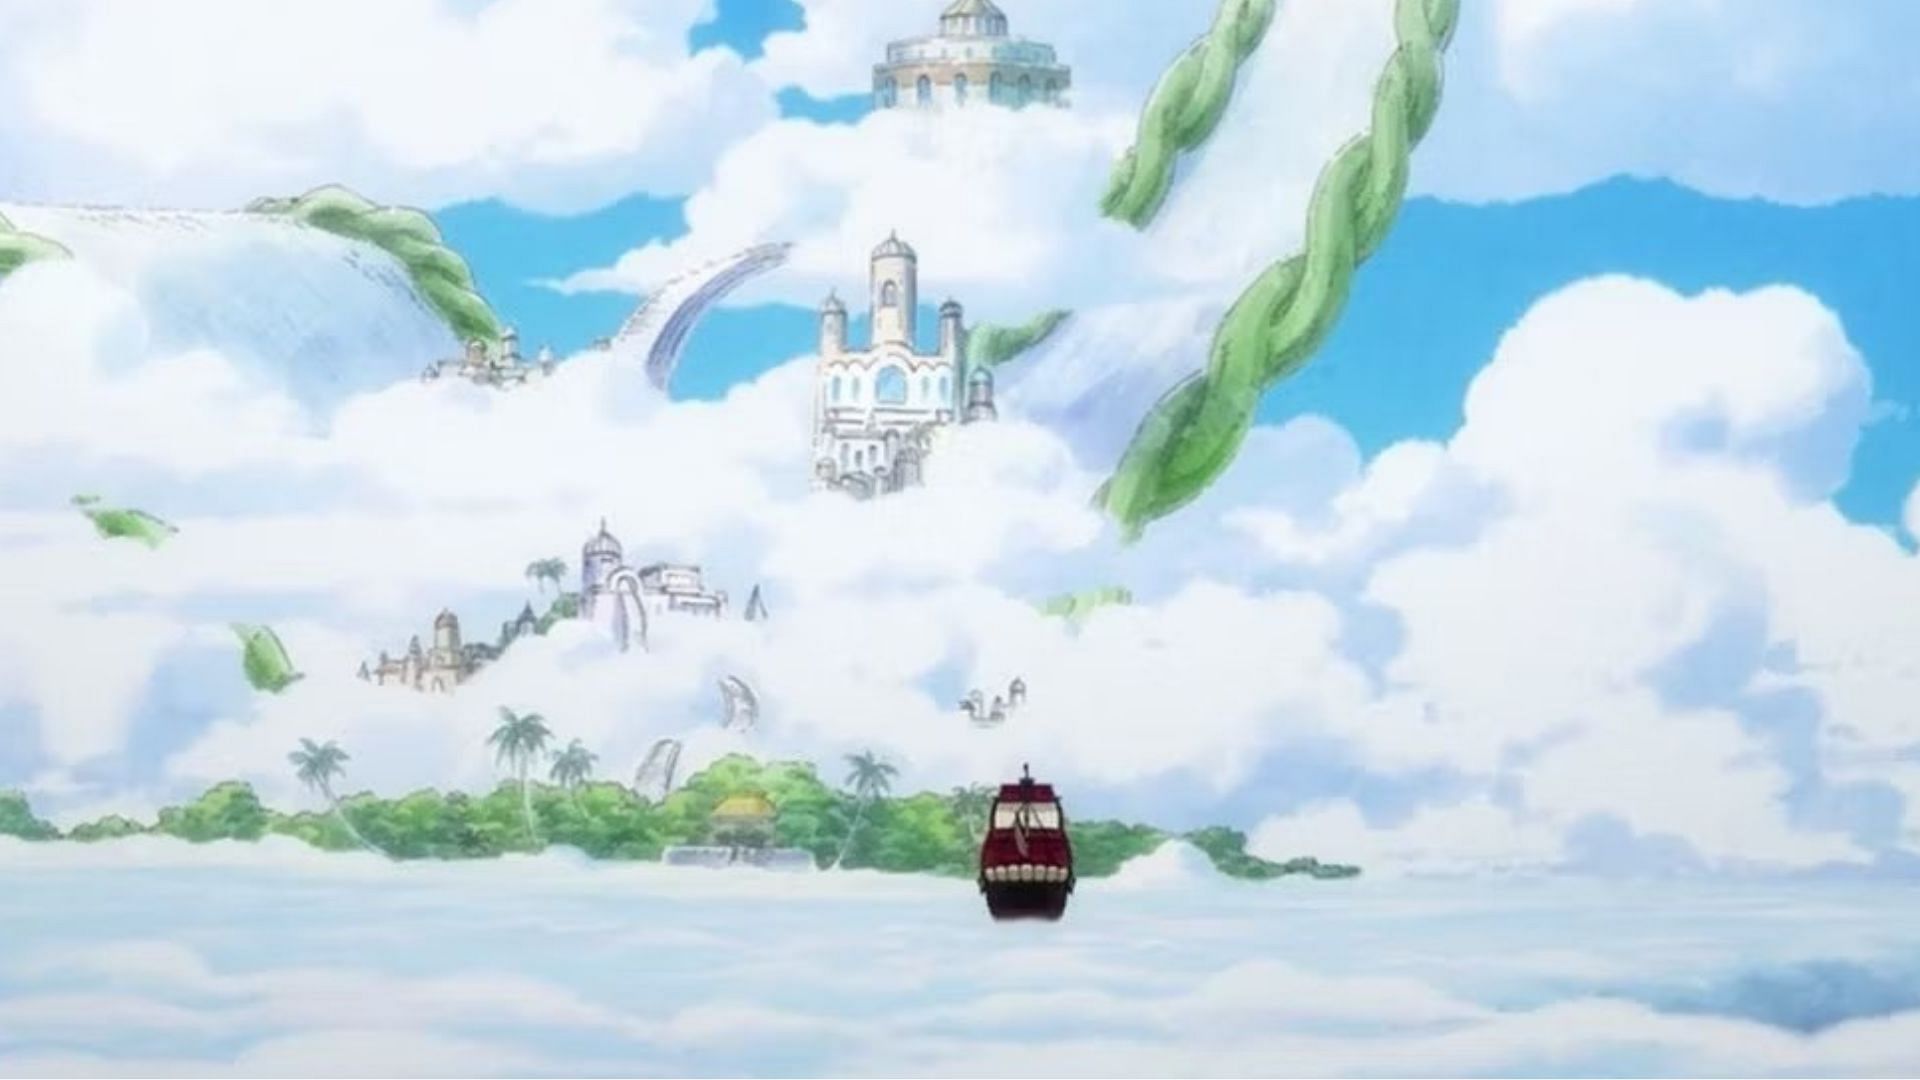 Sky Island as shown in the anime (Image via Toei Animation)